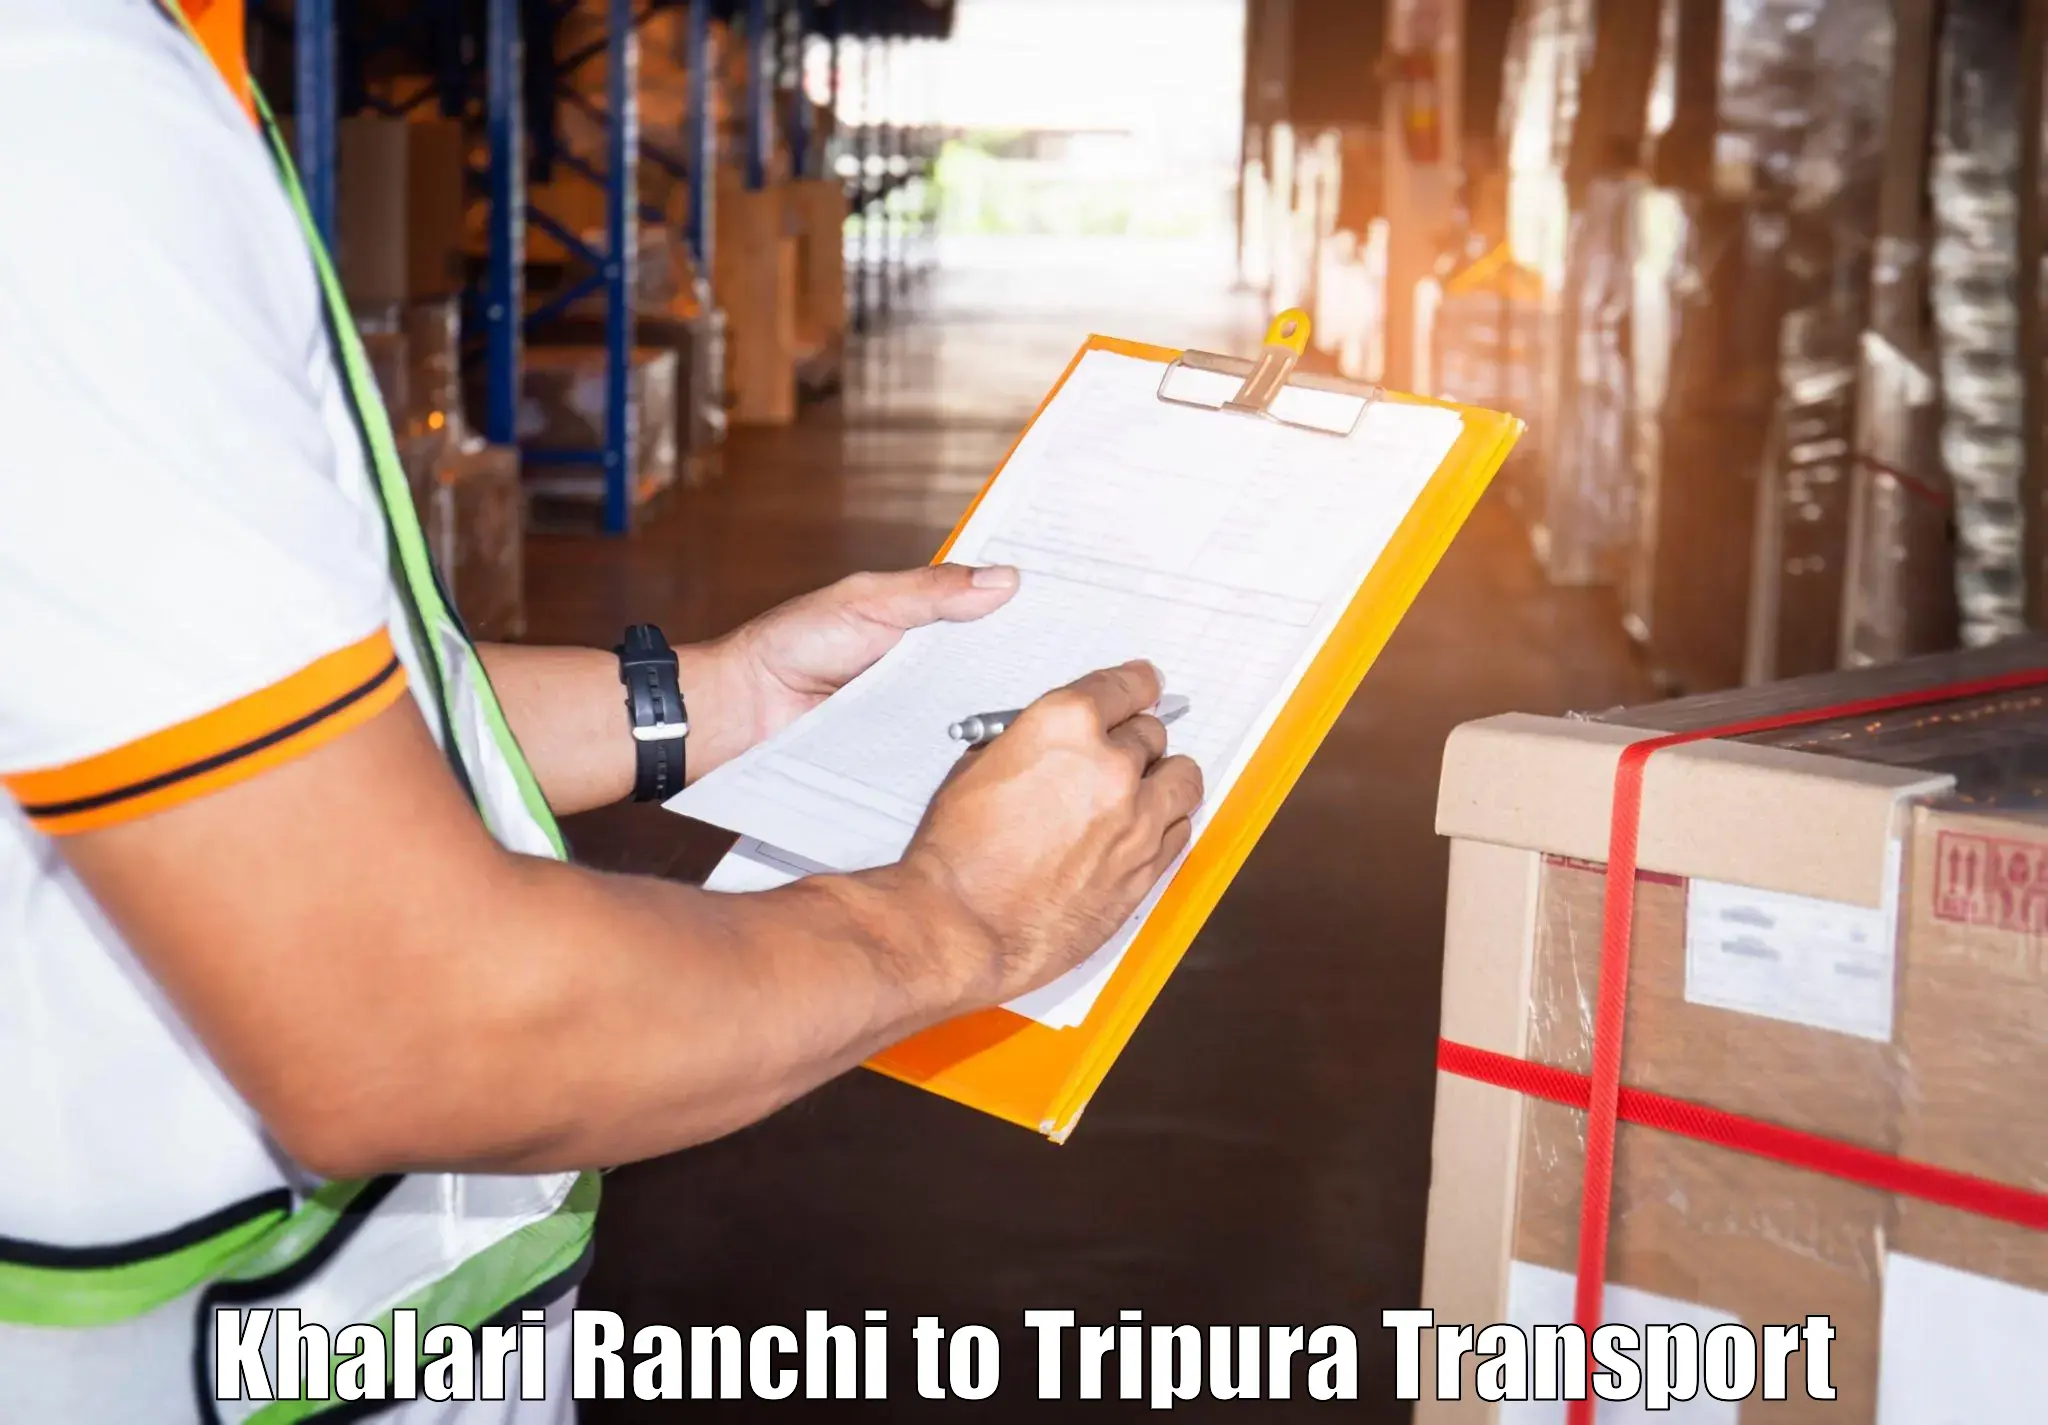 Door to door transport services Khalari Ranchi to Udaipur Tripura